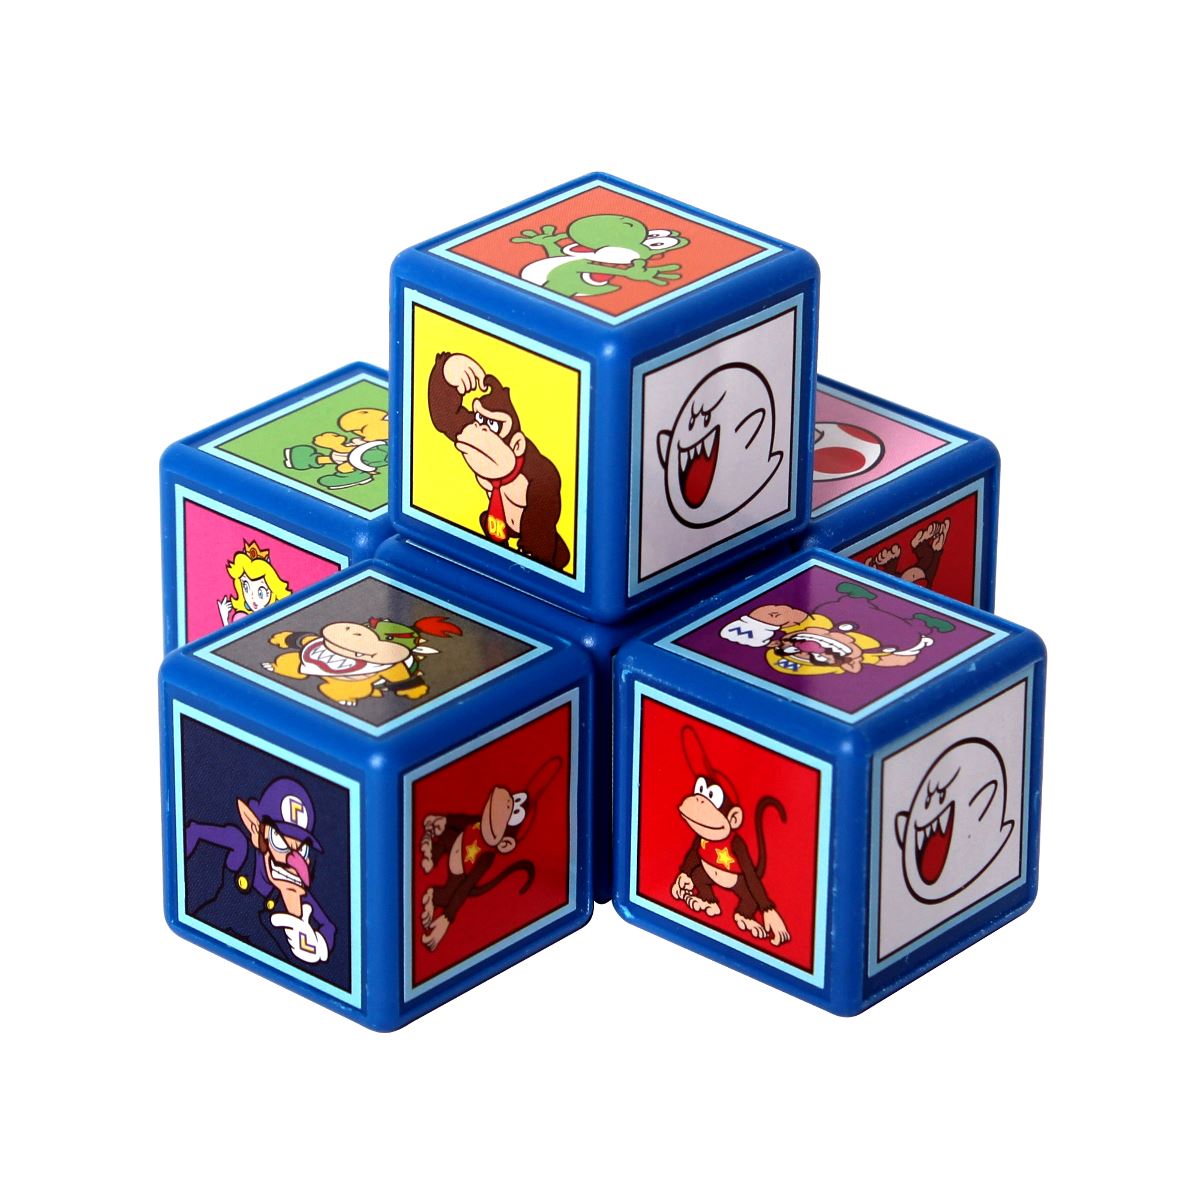 Super Mario Top Trumps Match - The Crazy Cube Game